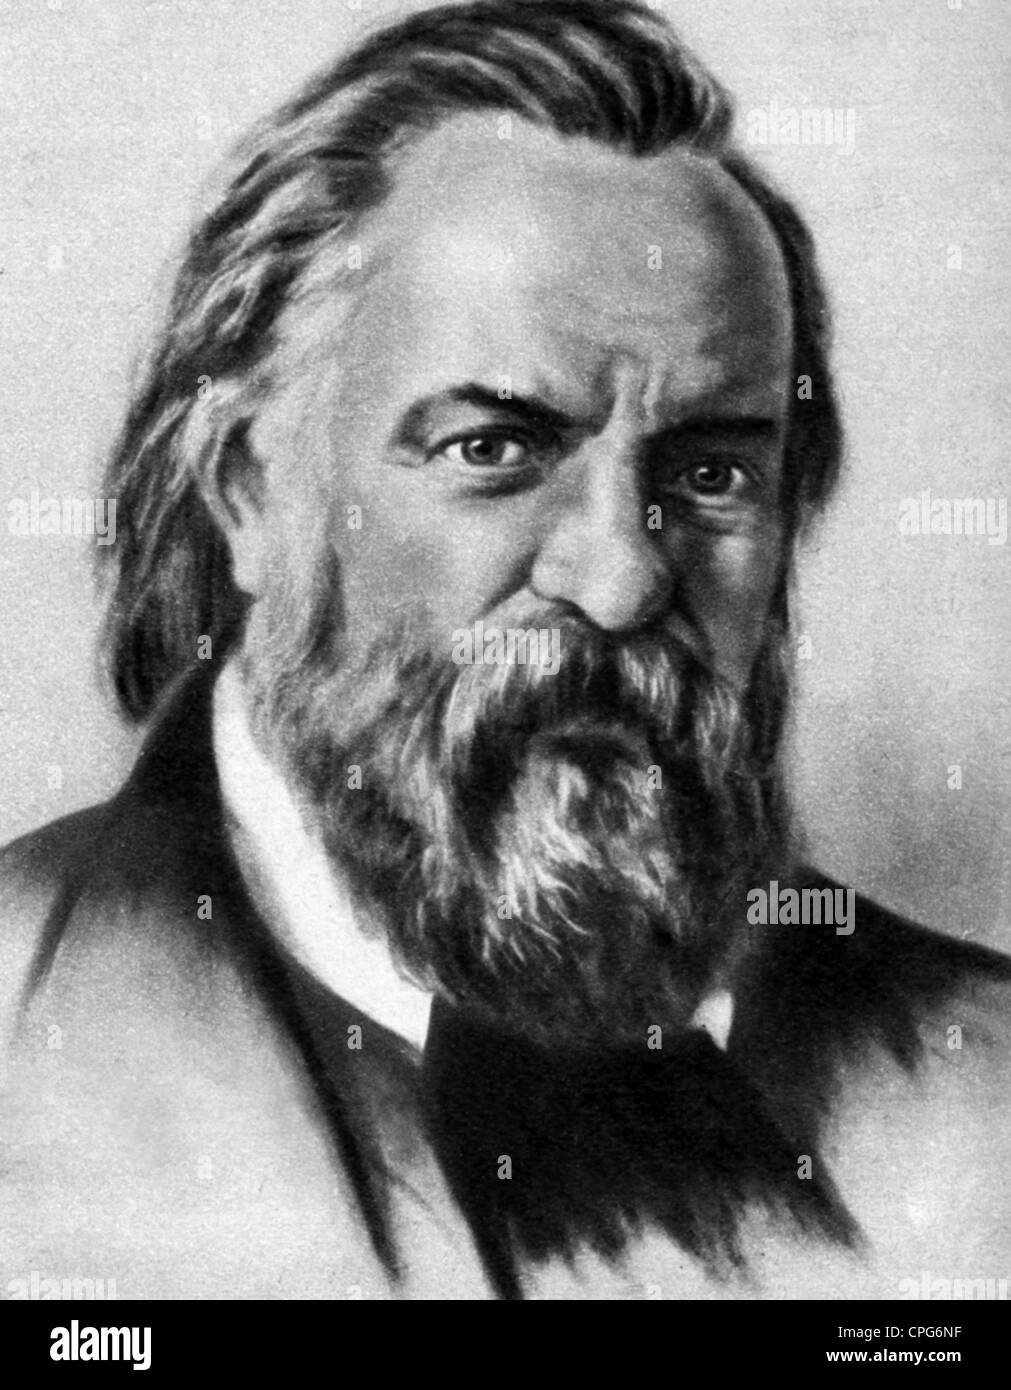 Herzen, Alexander, 6.4.1812 - 21.1.1870, Russian author / writer, revolutionist, portrait, drawing, 19th century, Stock Photo